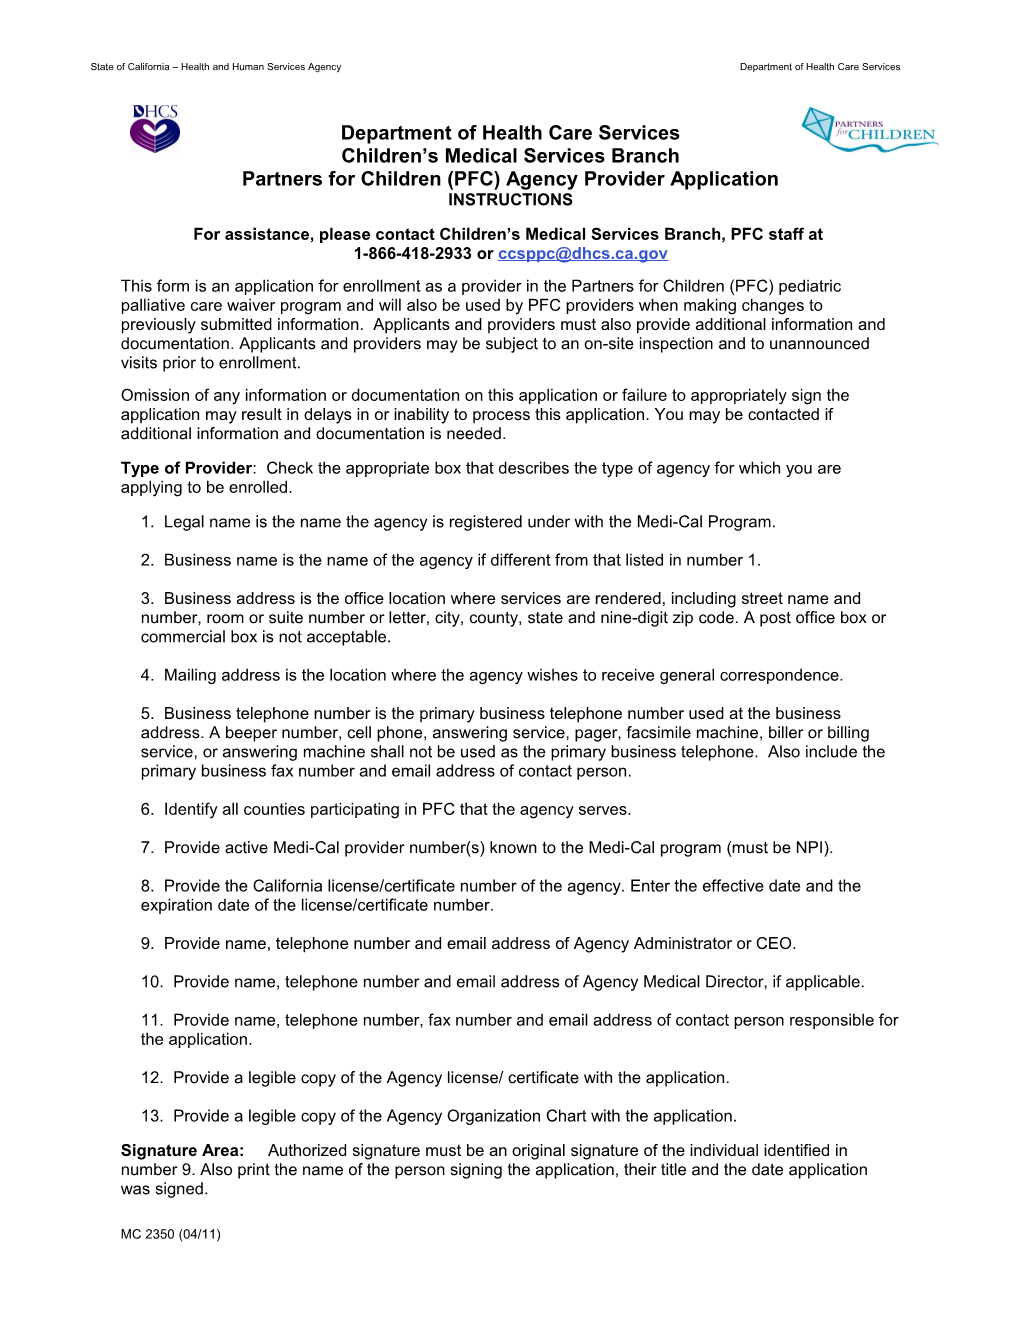 Application for Provider Participation in the Pediatric Palliative Care Waiver